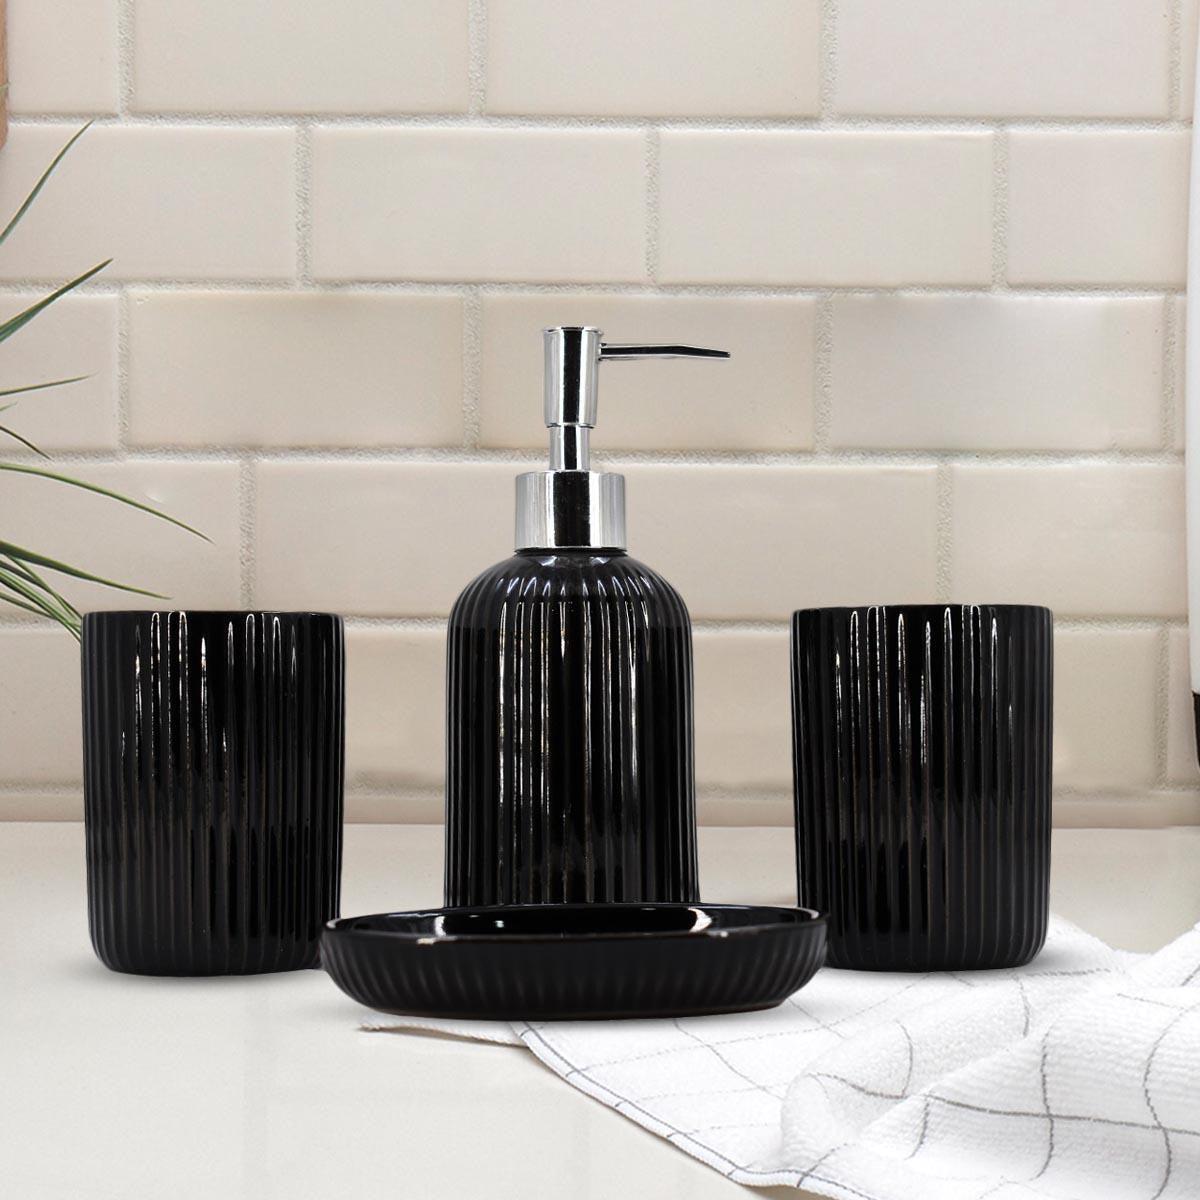 Ceramic Bathroom Accessories Set of 4 Bath Set with Soap Dispenser (8230)